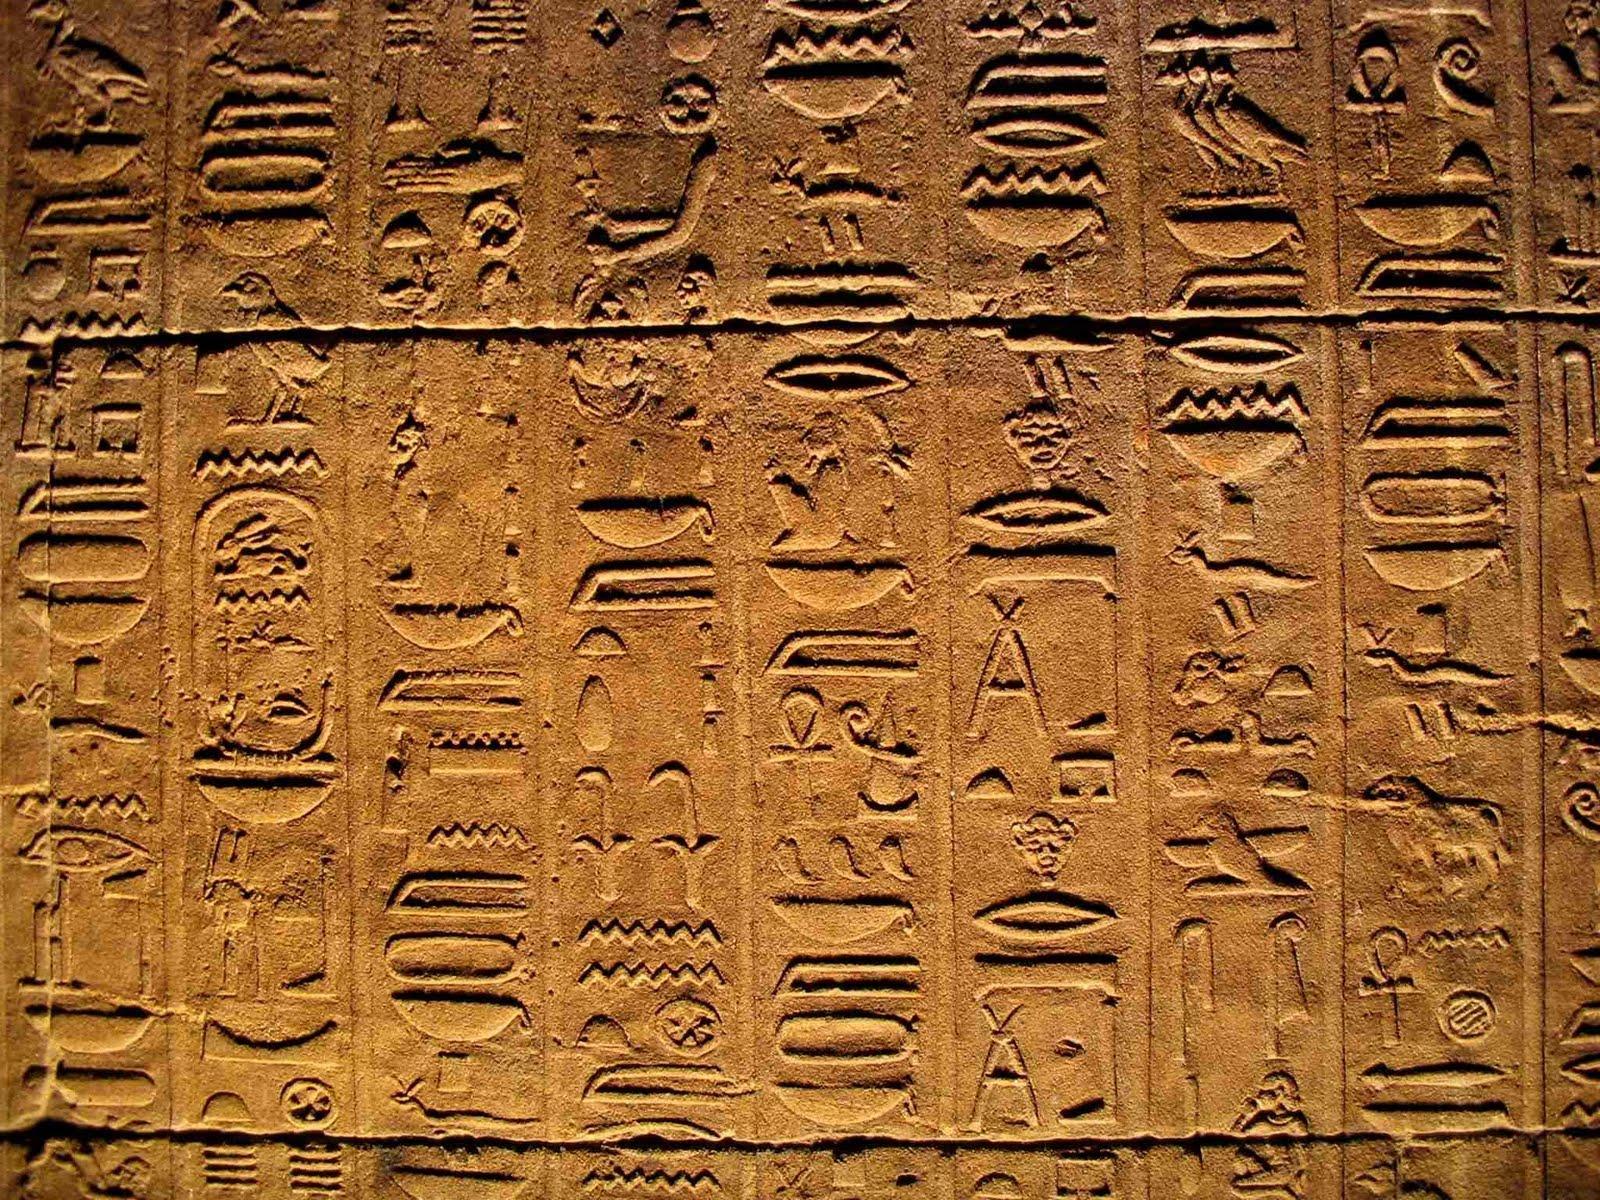 1. Egyptian Hieroglyphic Nail Art - wide 1